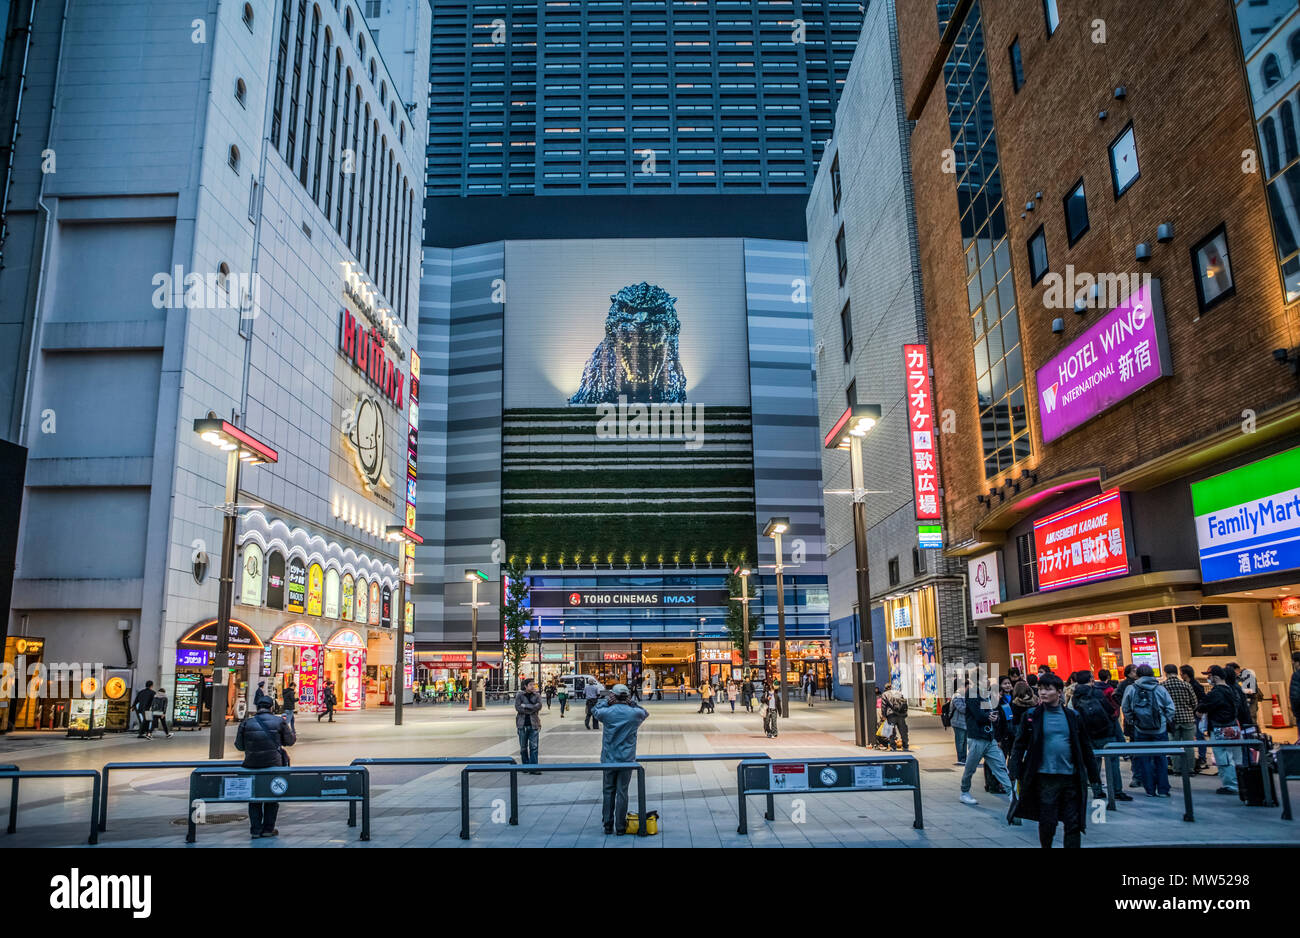 Japan , Tokyo City, Shinjuku District, Kabukicho area, Stock Photo